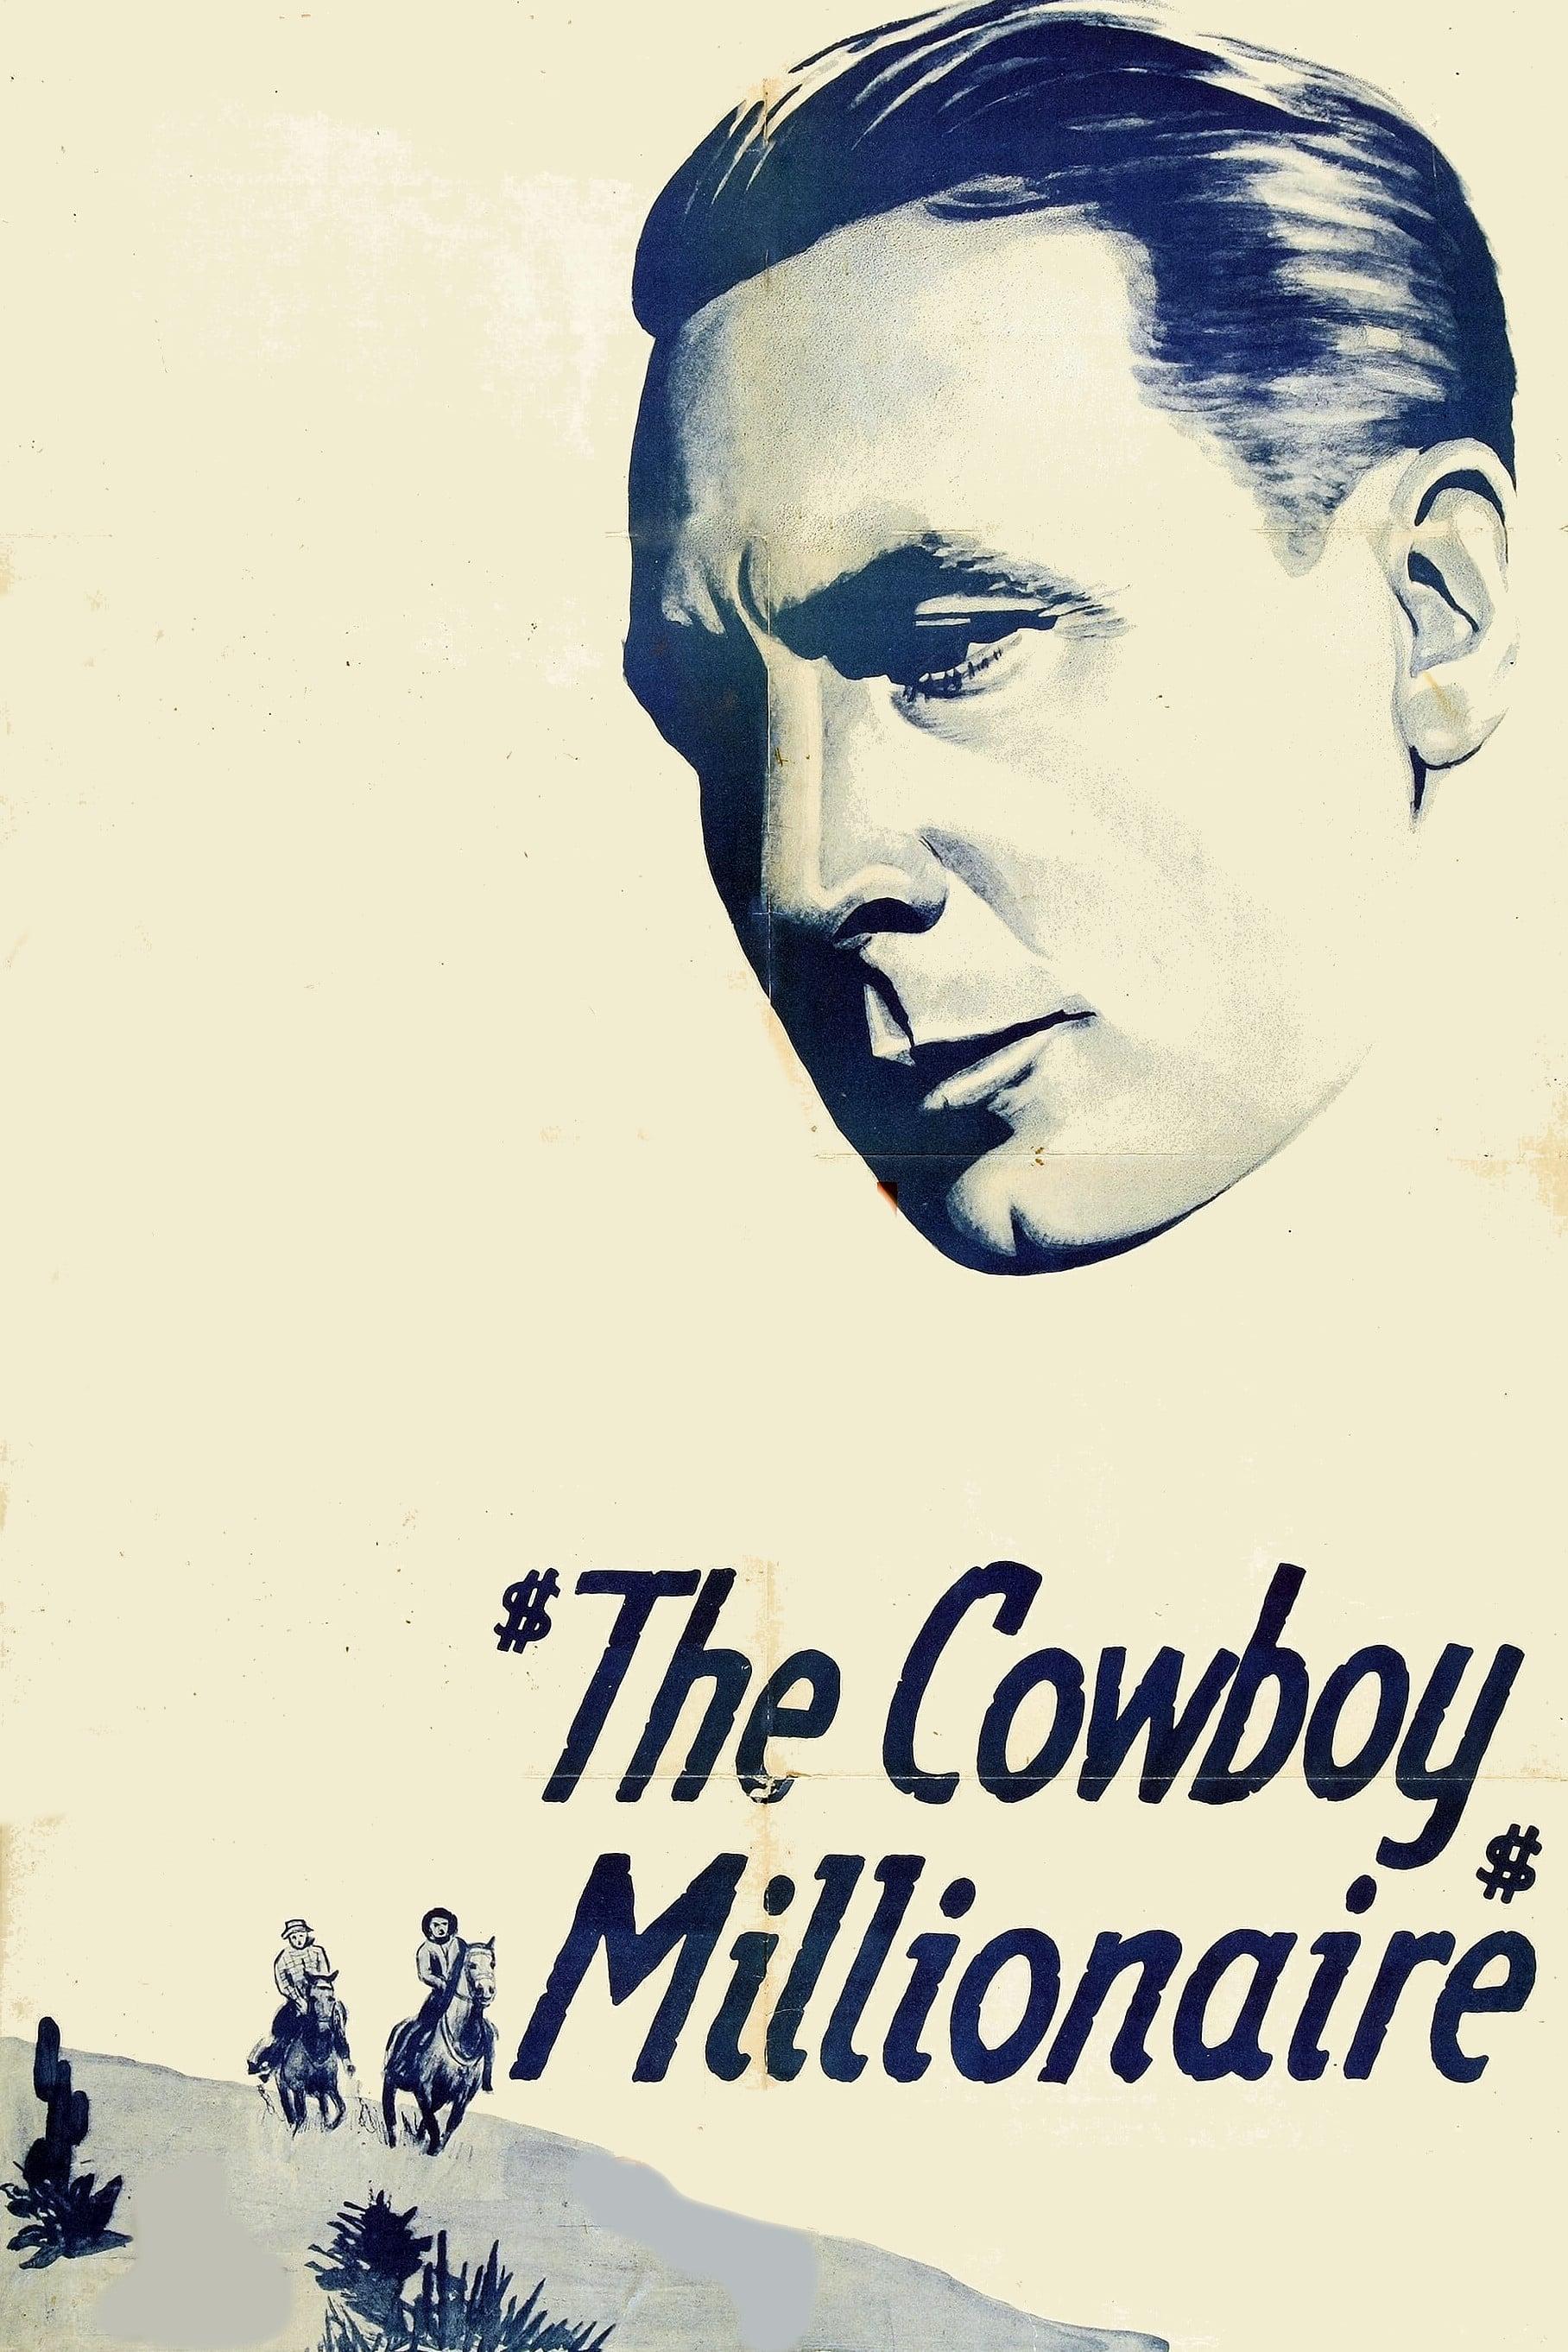 The Cowboy Millionaire poster